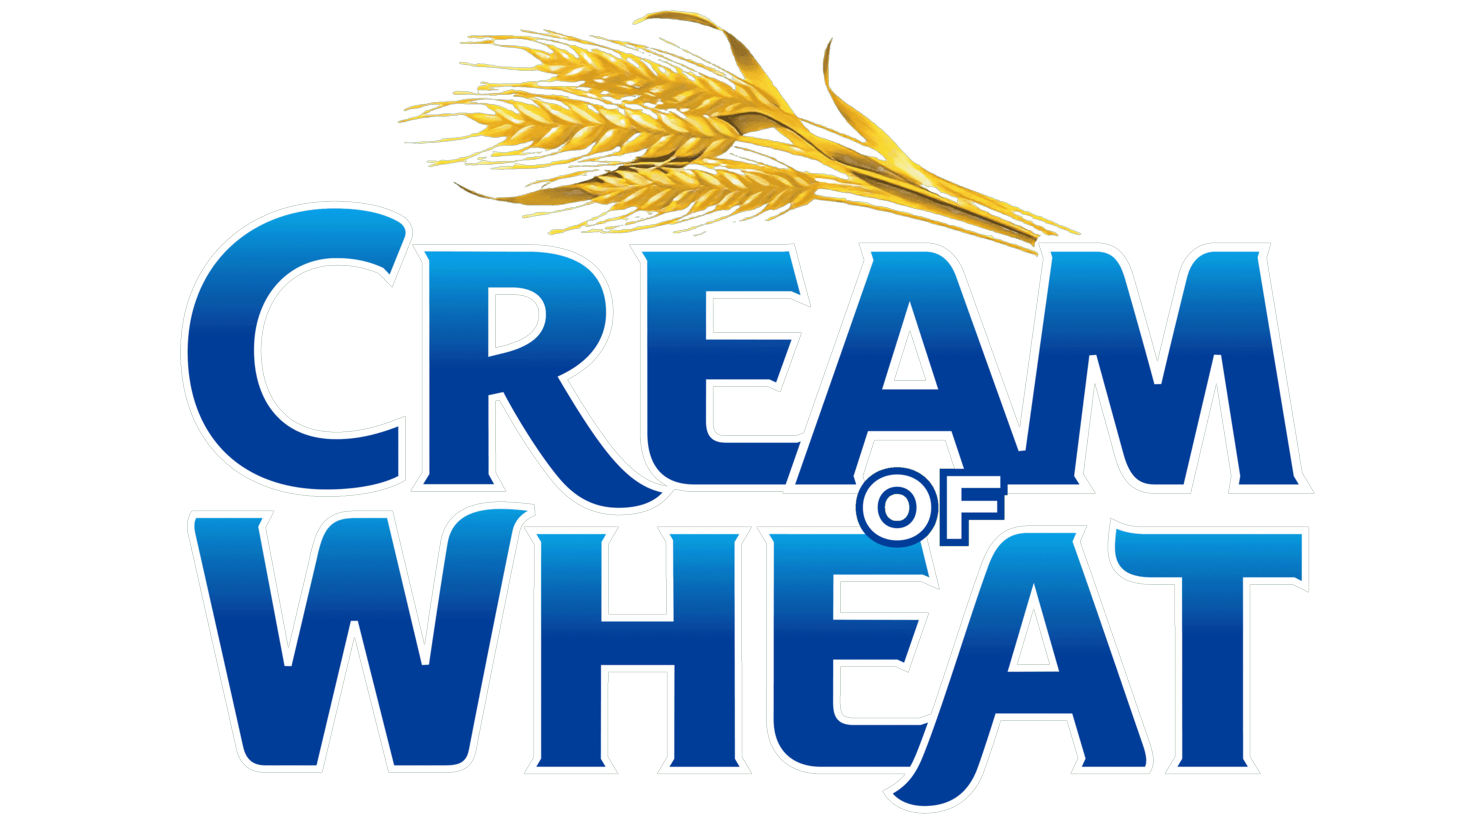 Cream of wheat logo